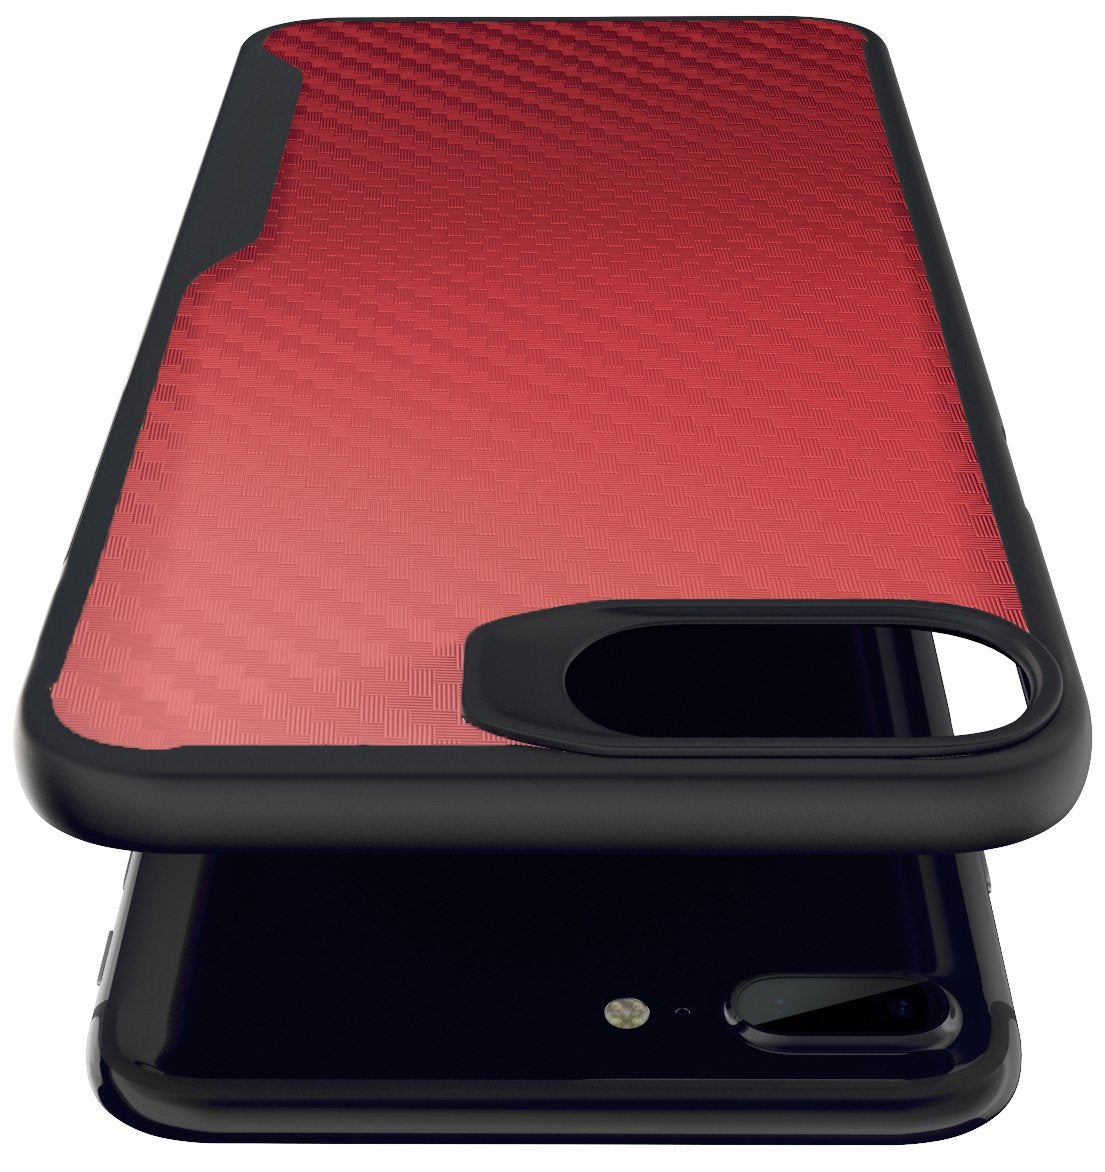 iPhone 7 Plus / iPhone 8 Plus Kitoo Carbon Fiber Pattern Case Red